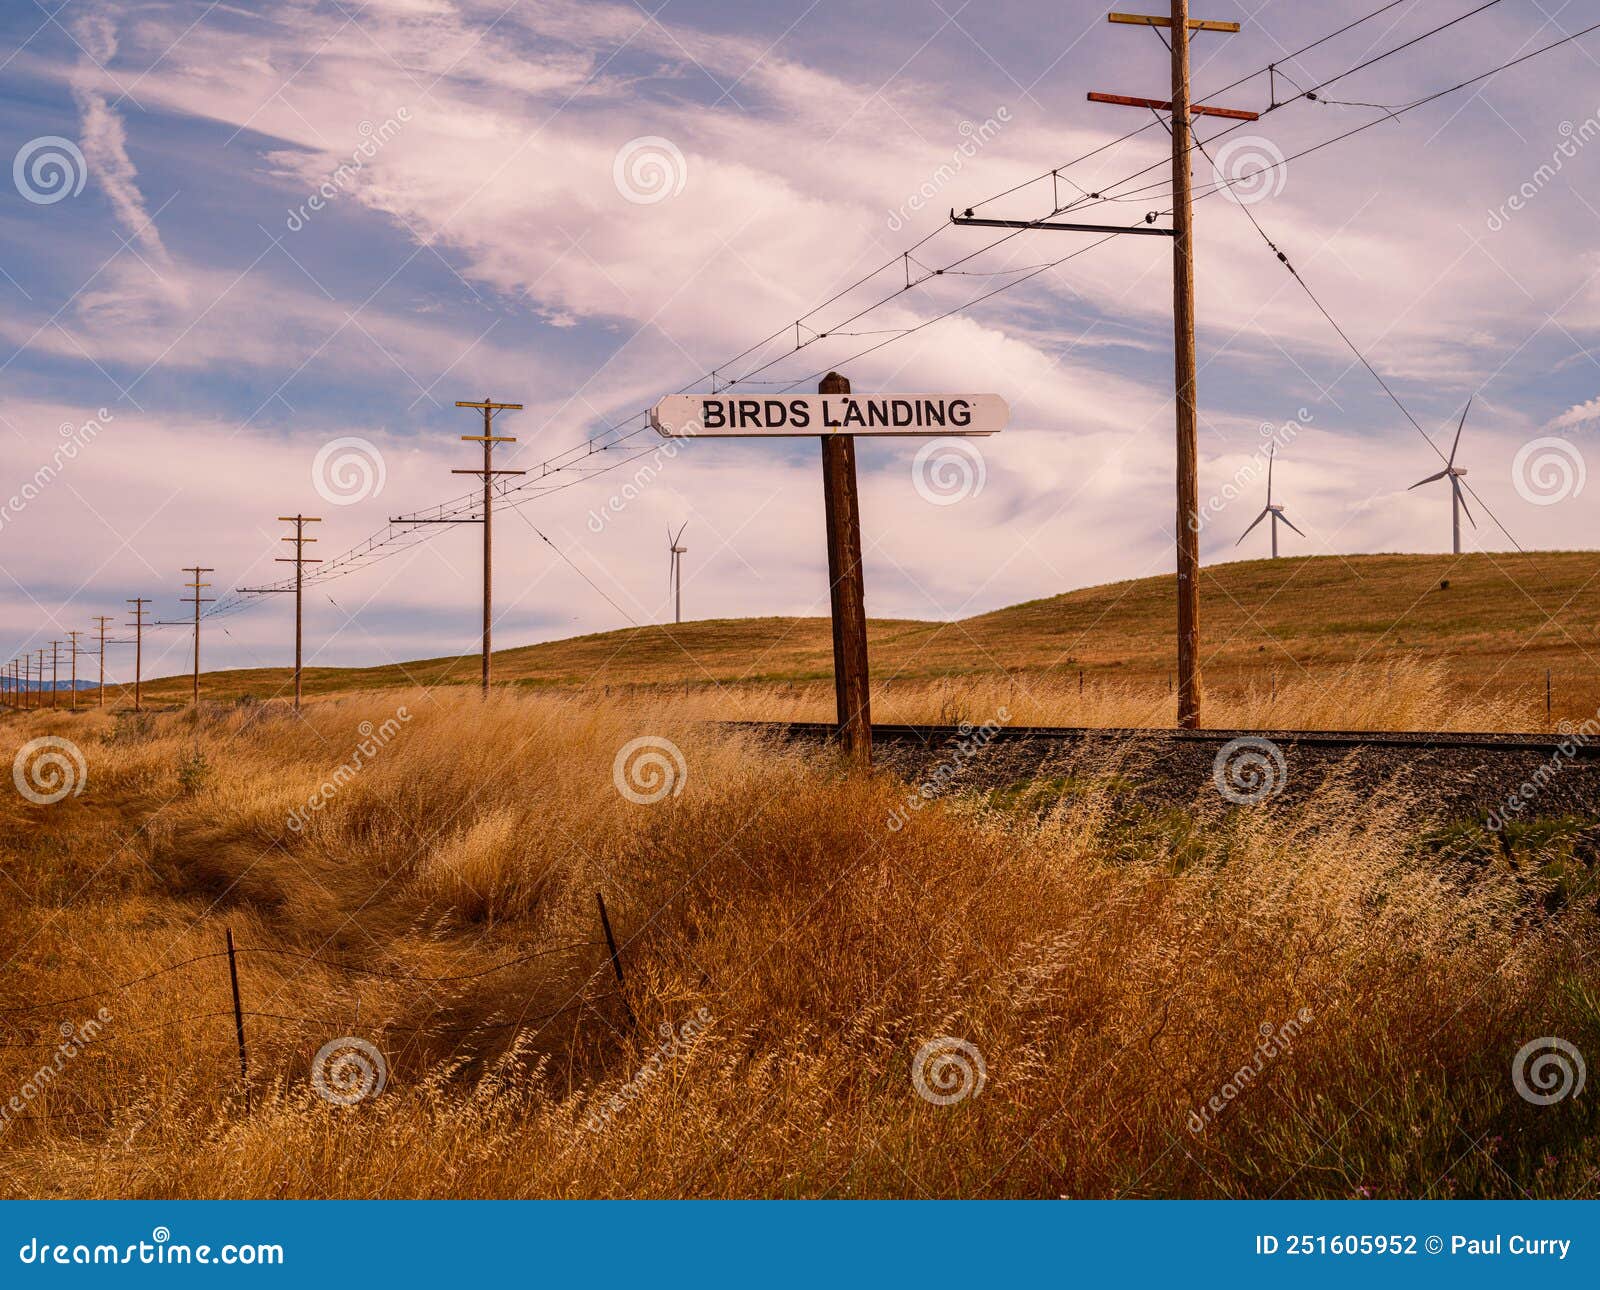 birds landing signage, solano county, california